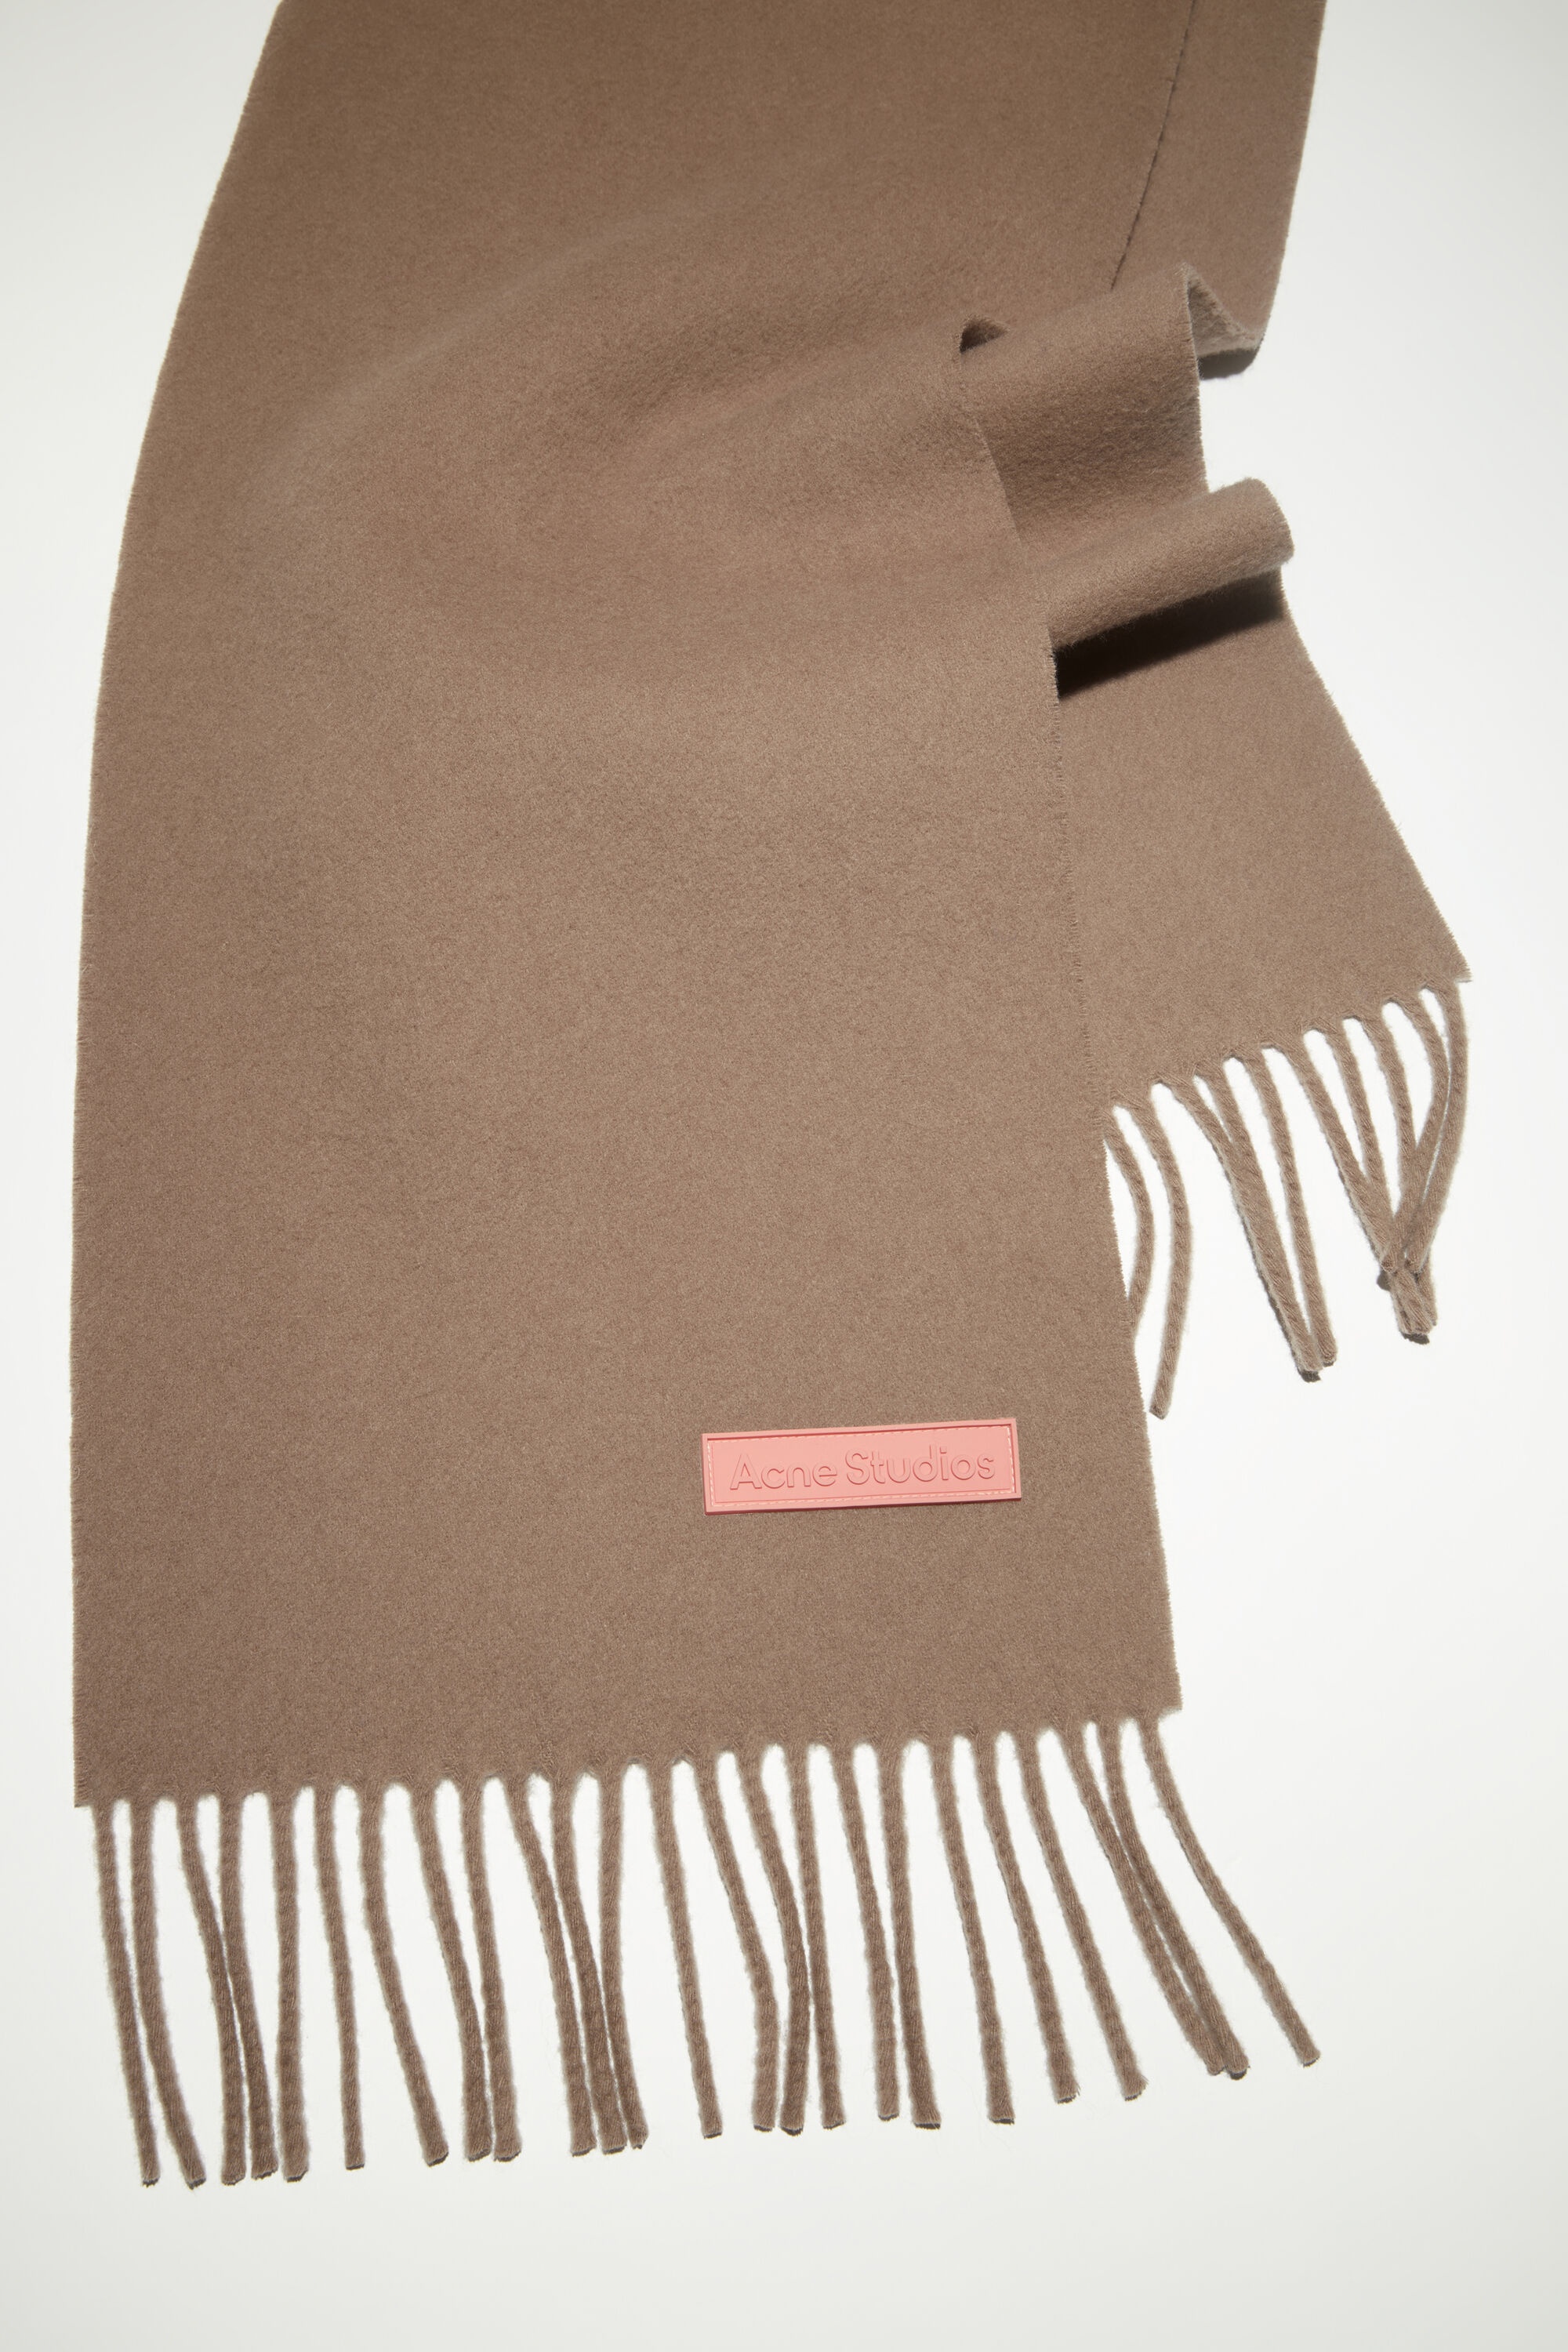 Wool scarf pink label - Narrow - Warm beige - 4